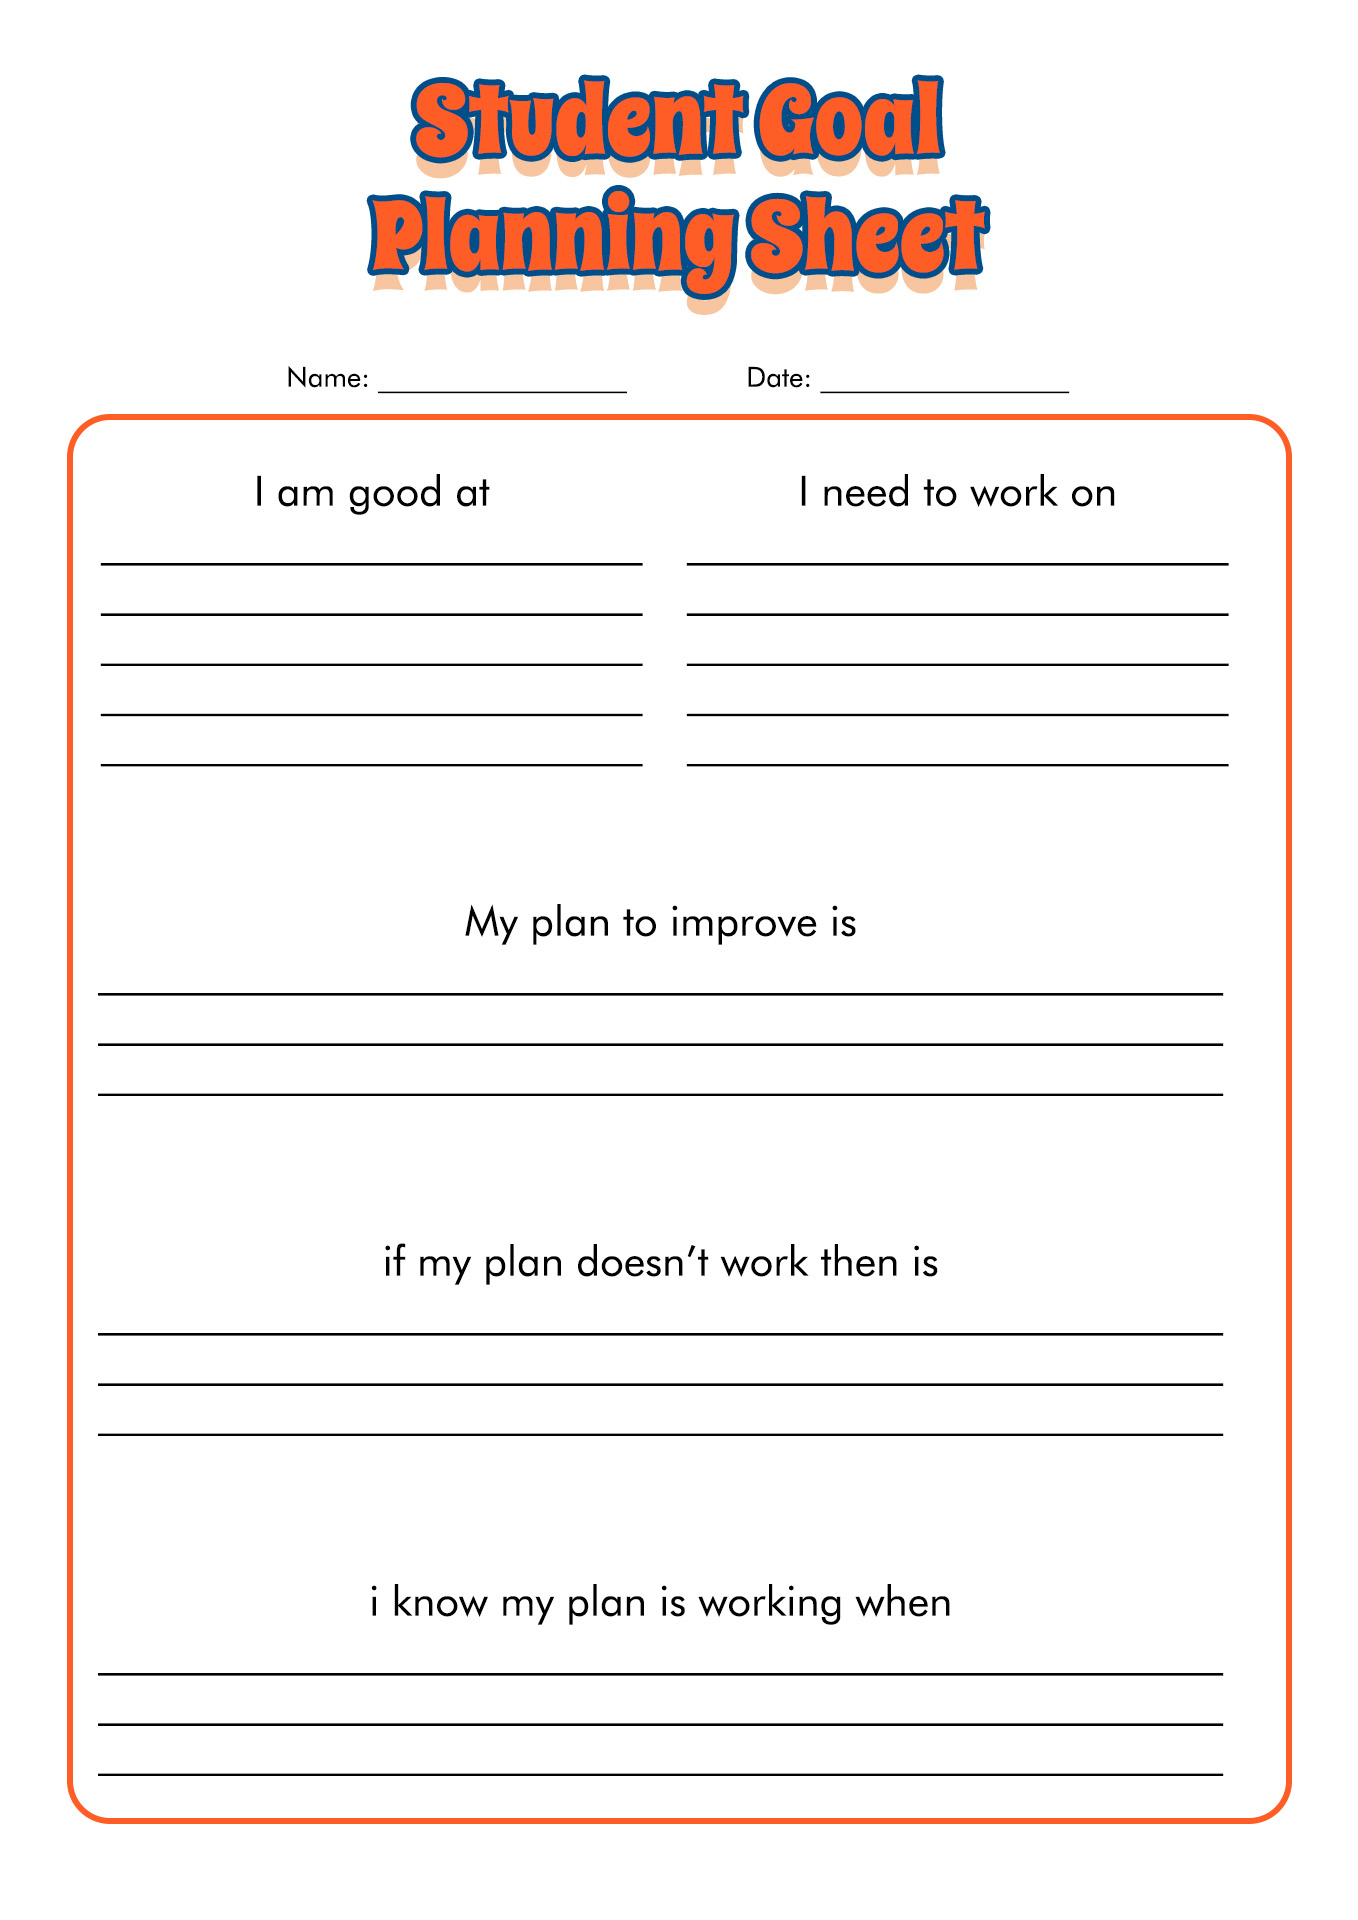 Student Goal Planning Sheet